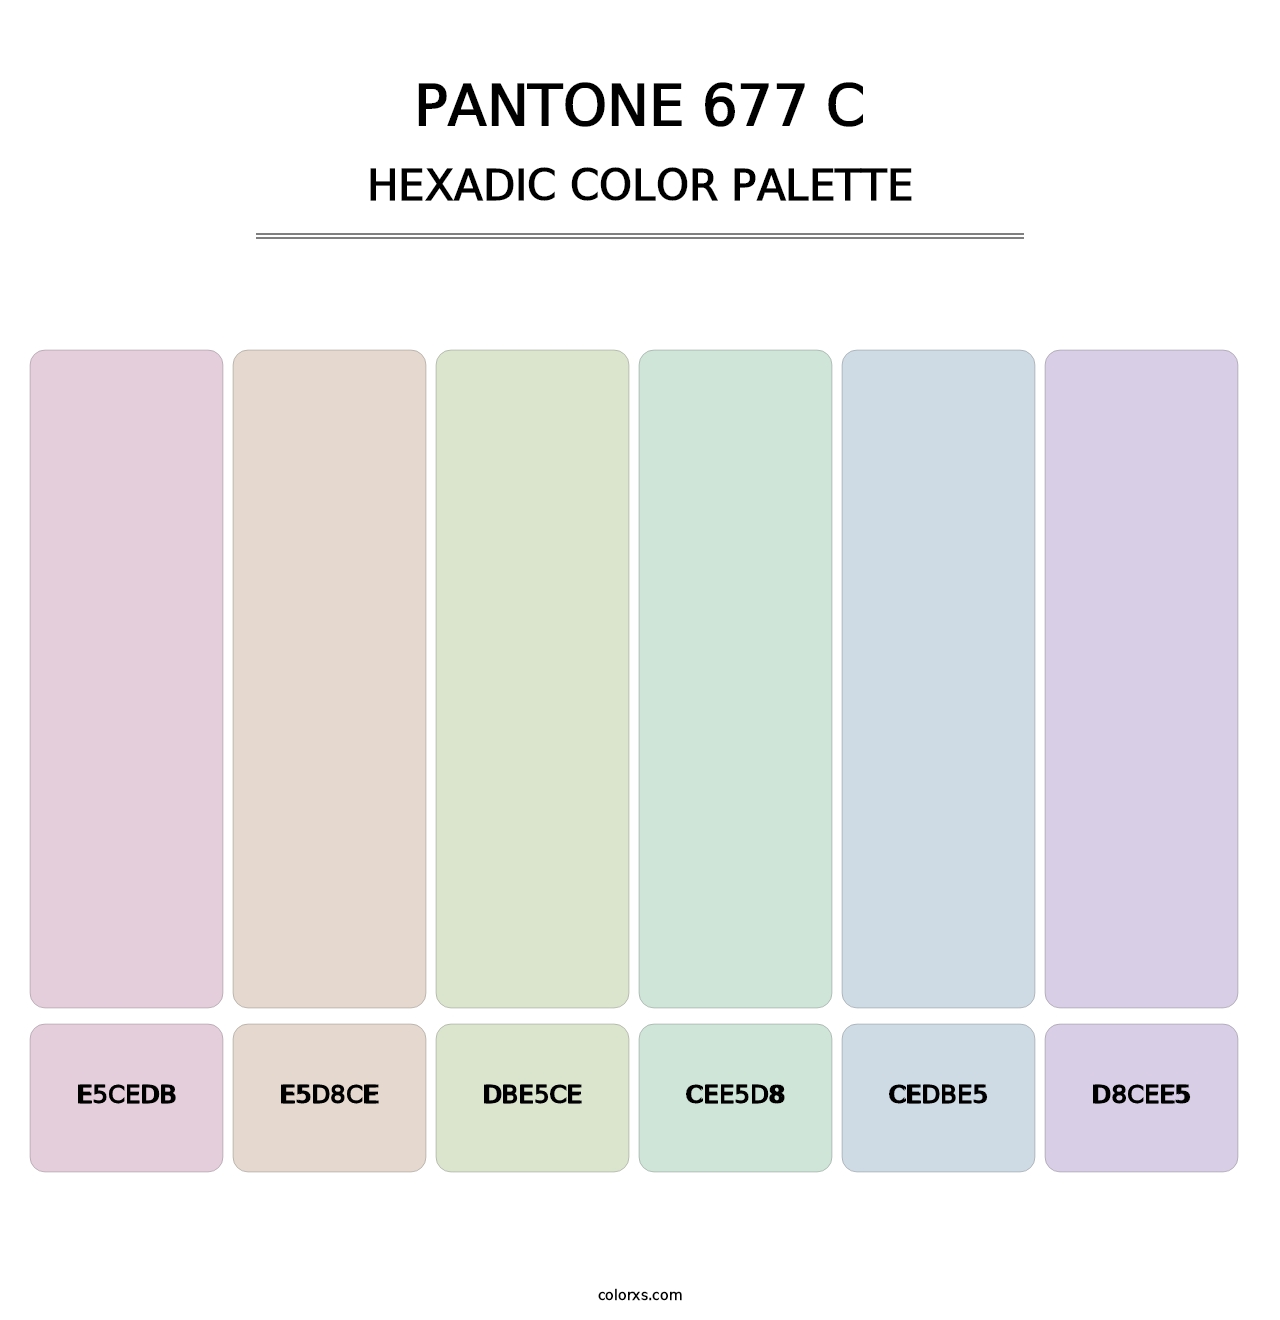 PANTONE 677 C - Hexadic Color Palette